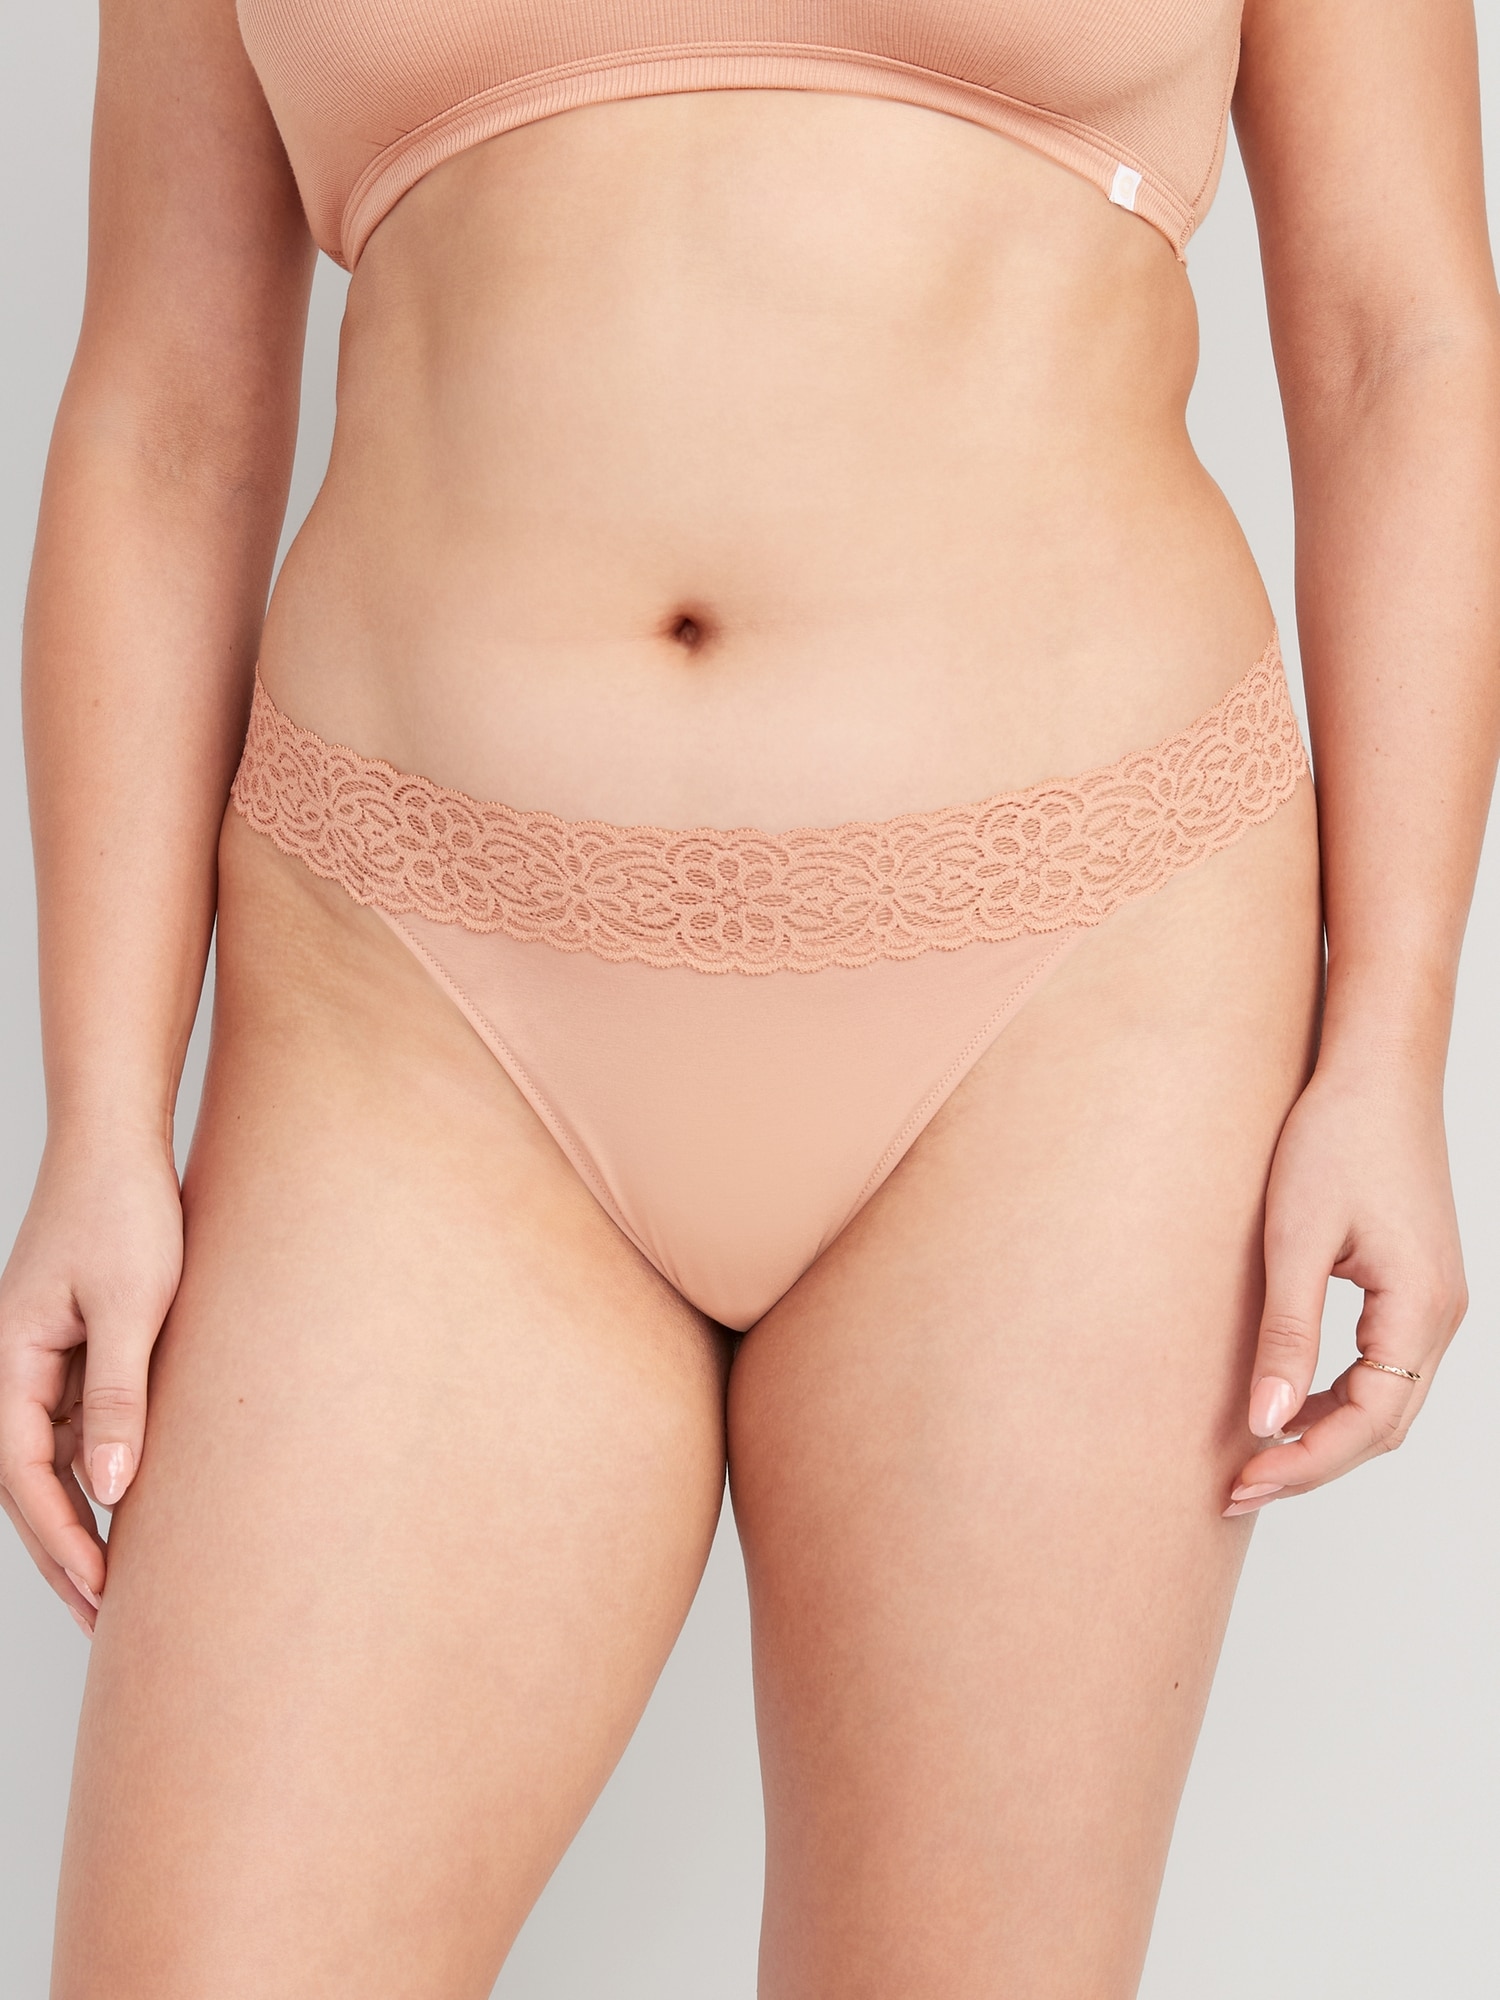 nsendm Female Underwear Adult Compression Women Top LaceBack G